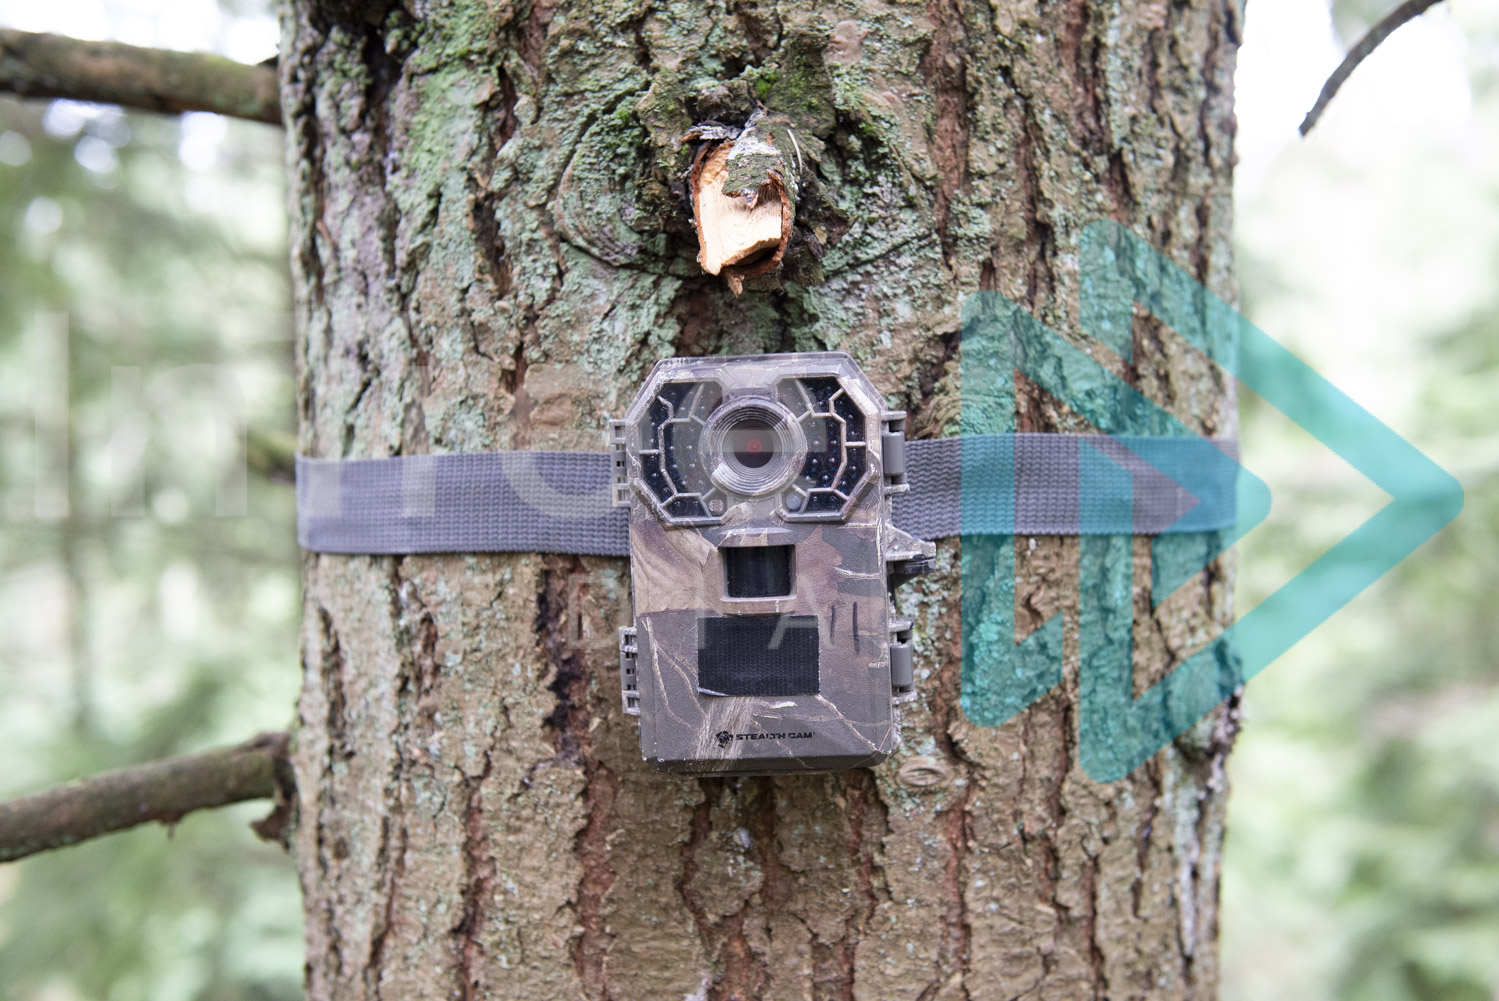 Wildlife Camera installed in tree InTree arborist image 001-21-6245